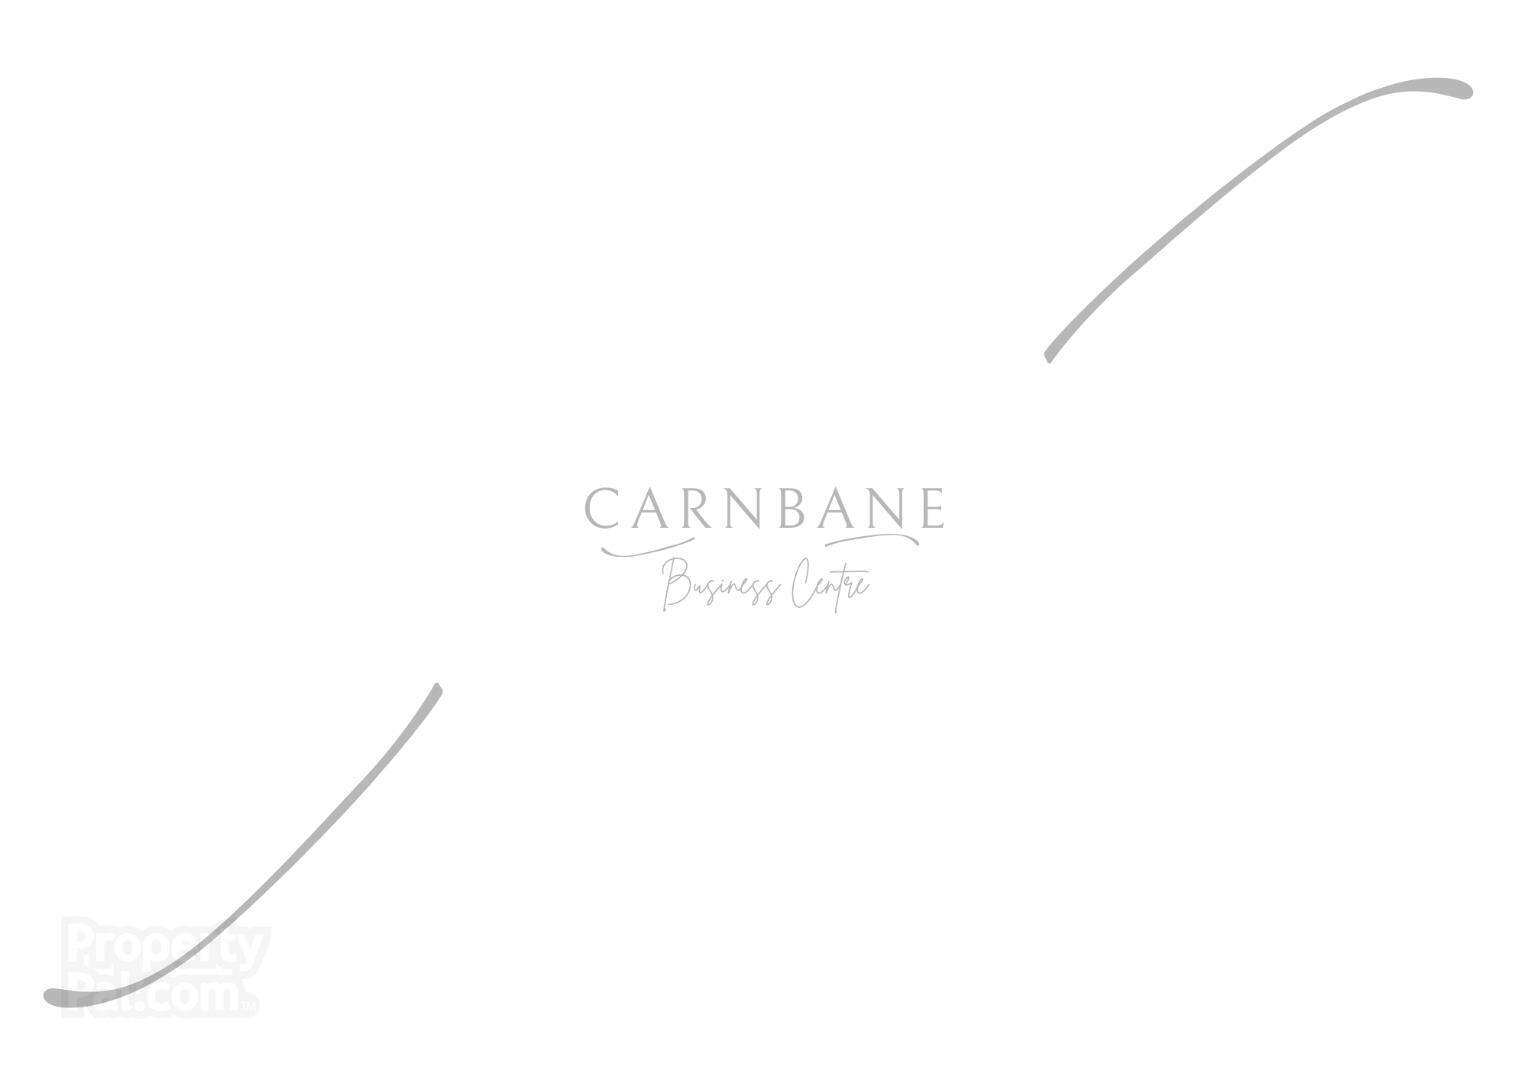 Carnbane Business Park